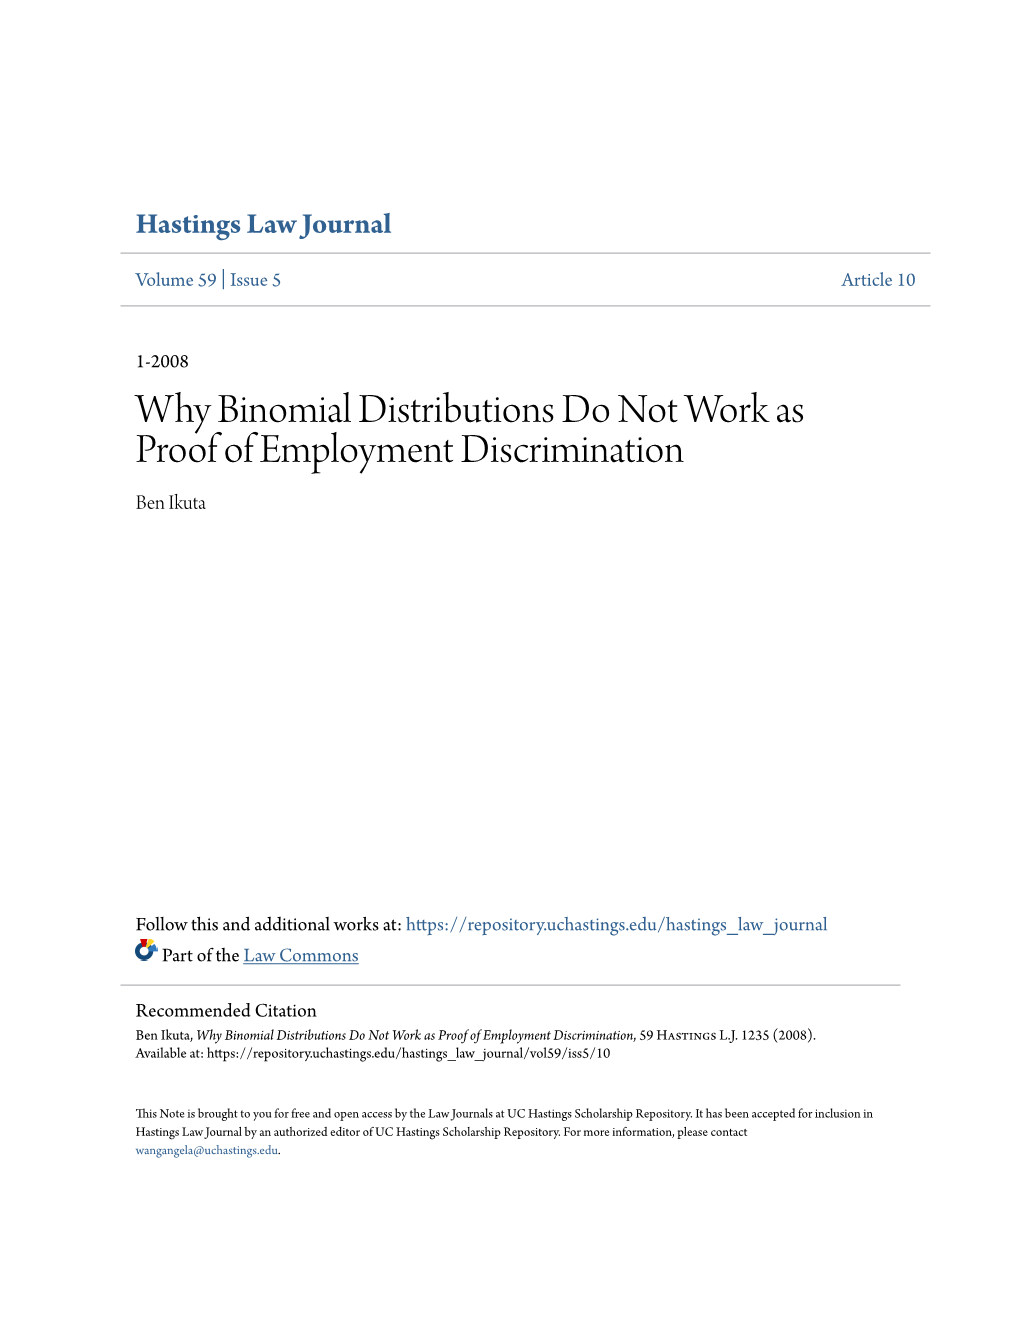 Why Binomial Distributions Do Not Work As Proof of Employment Discrimination Ben Ikuta